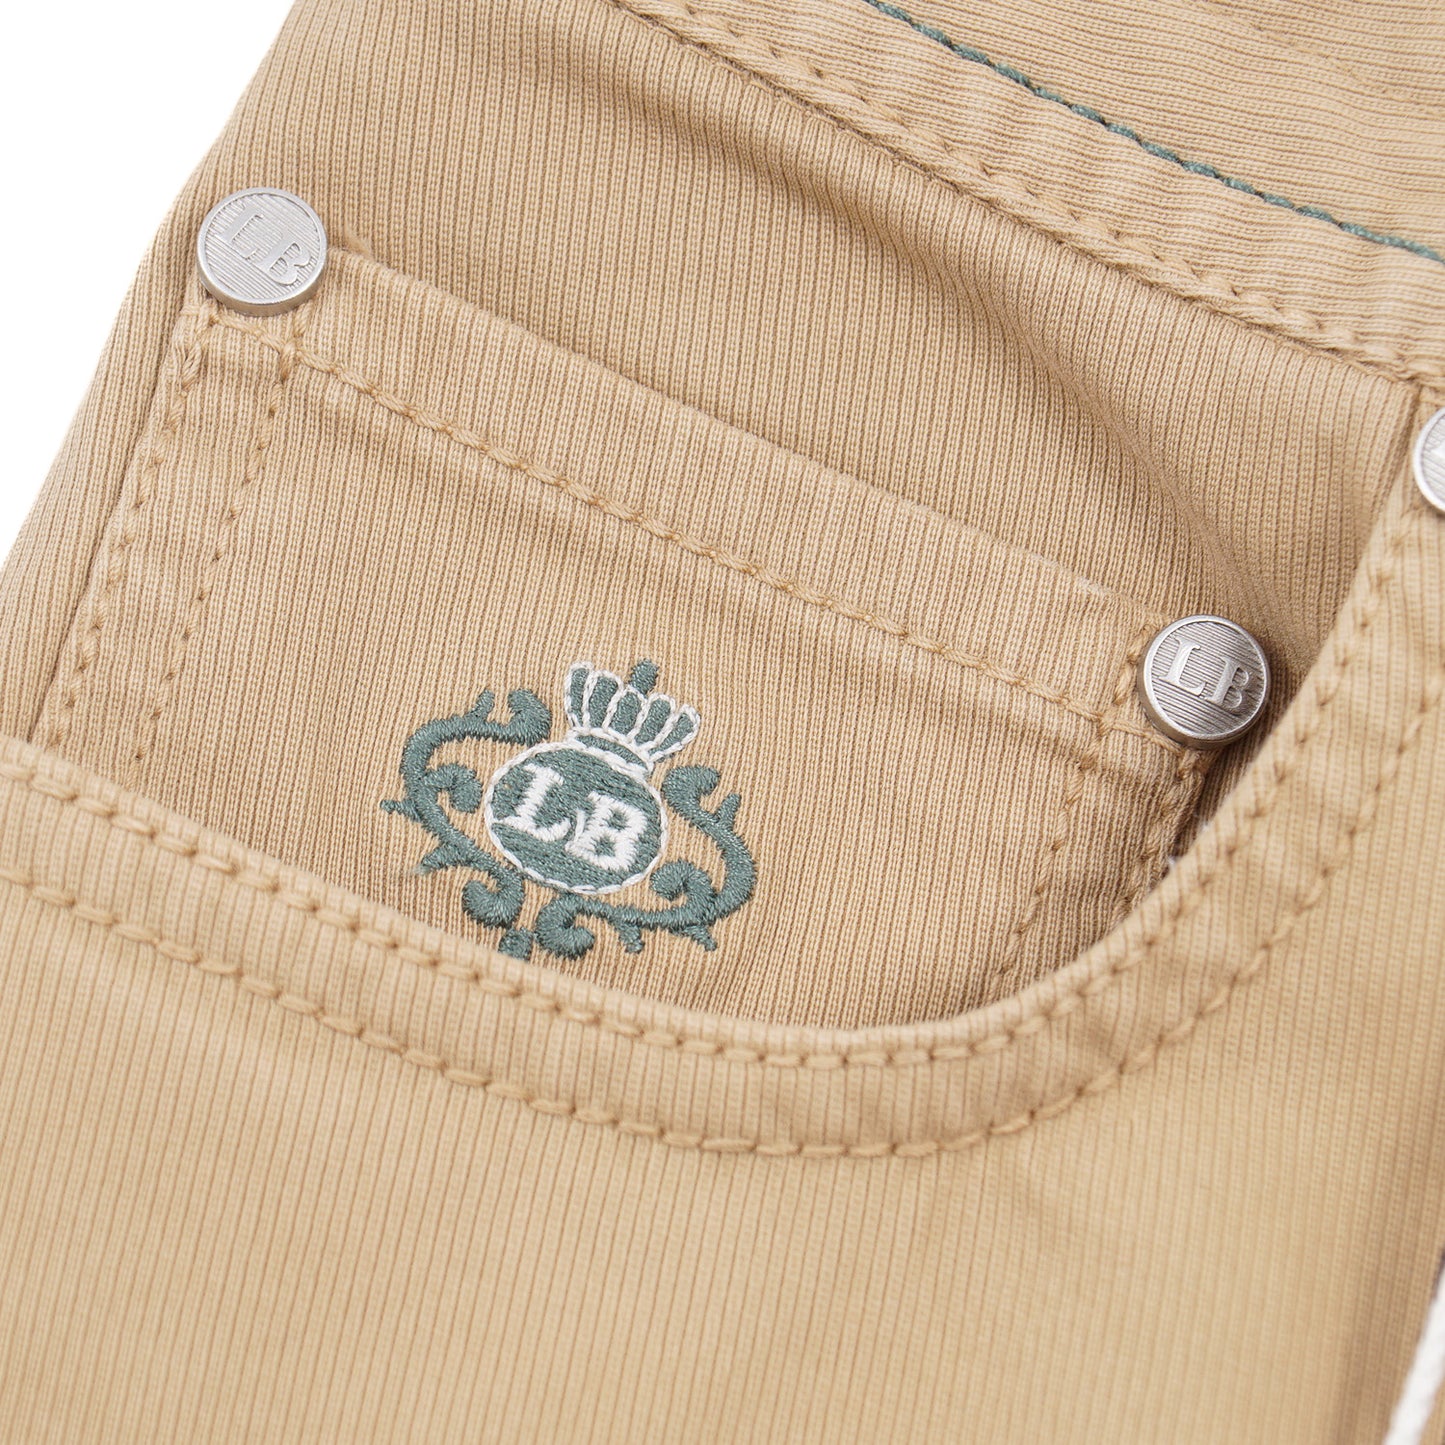 Luigi Borrelli Slim-Fit 5-Pocket Pants - Top Shelf Apparel